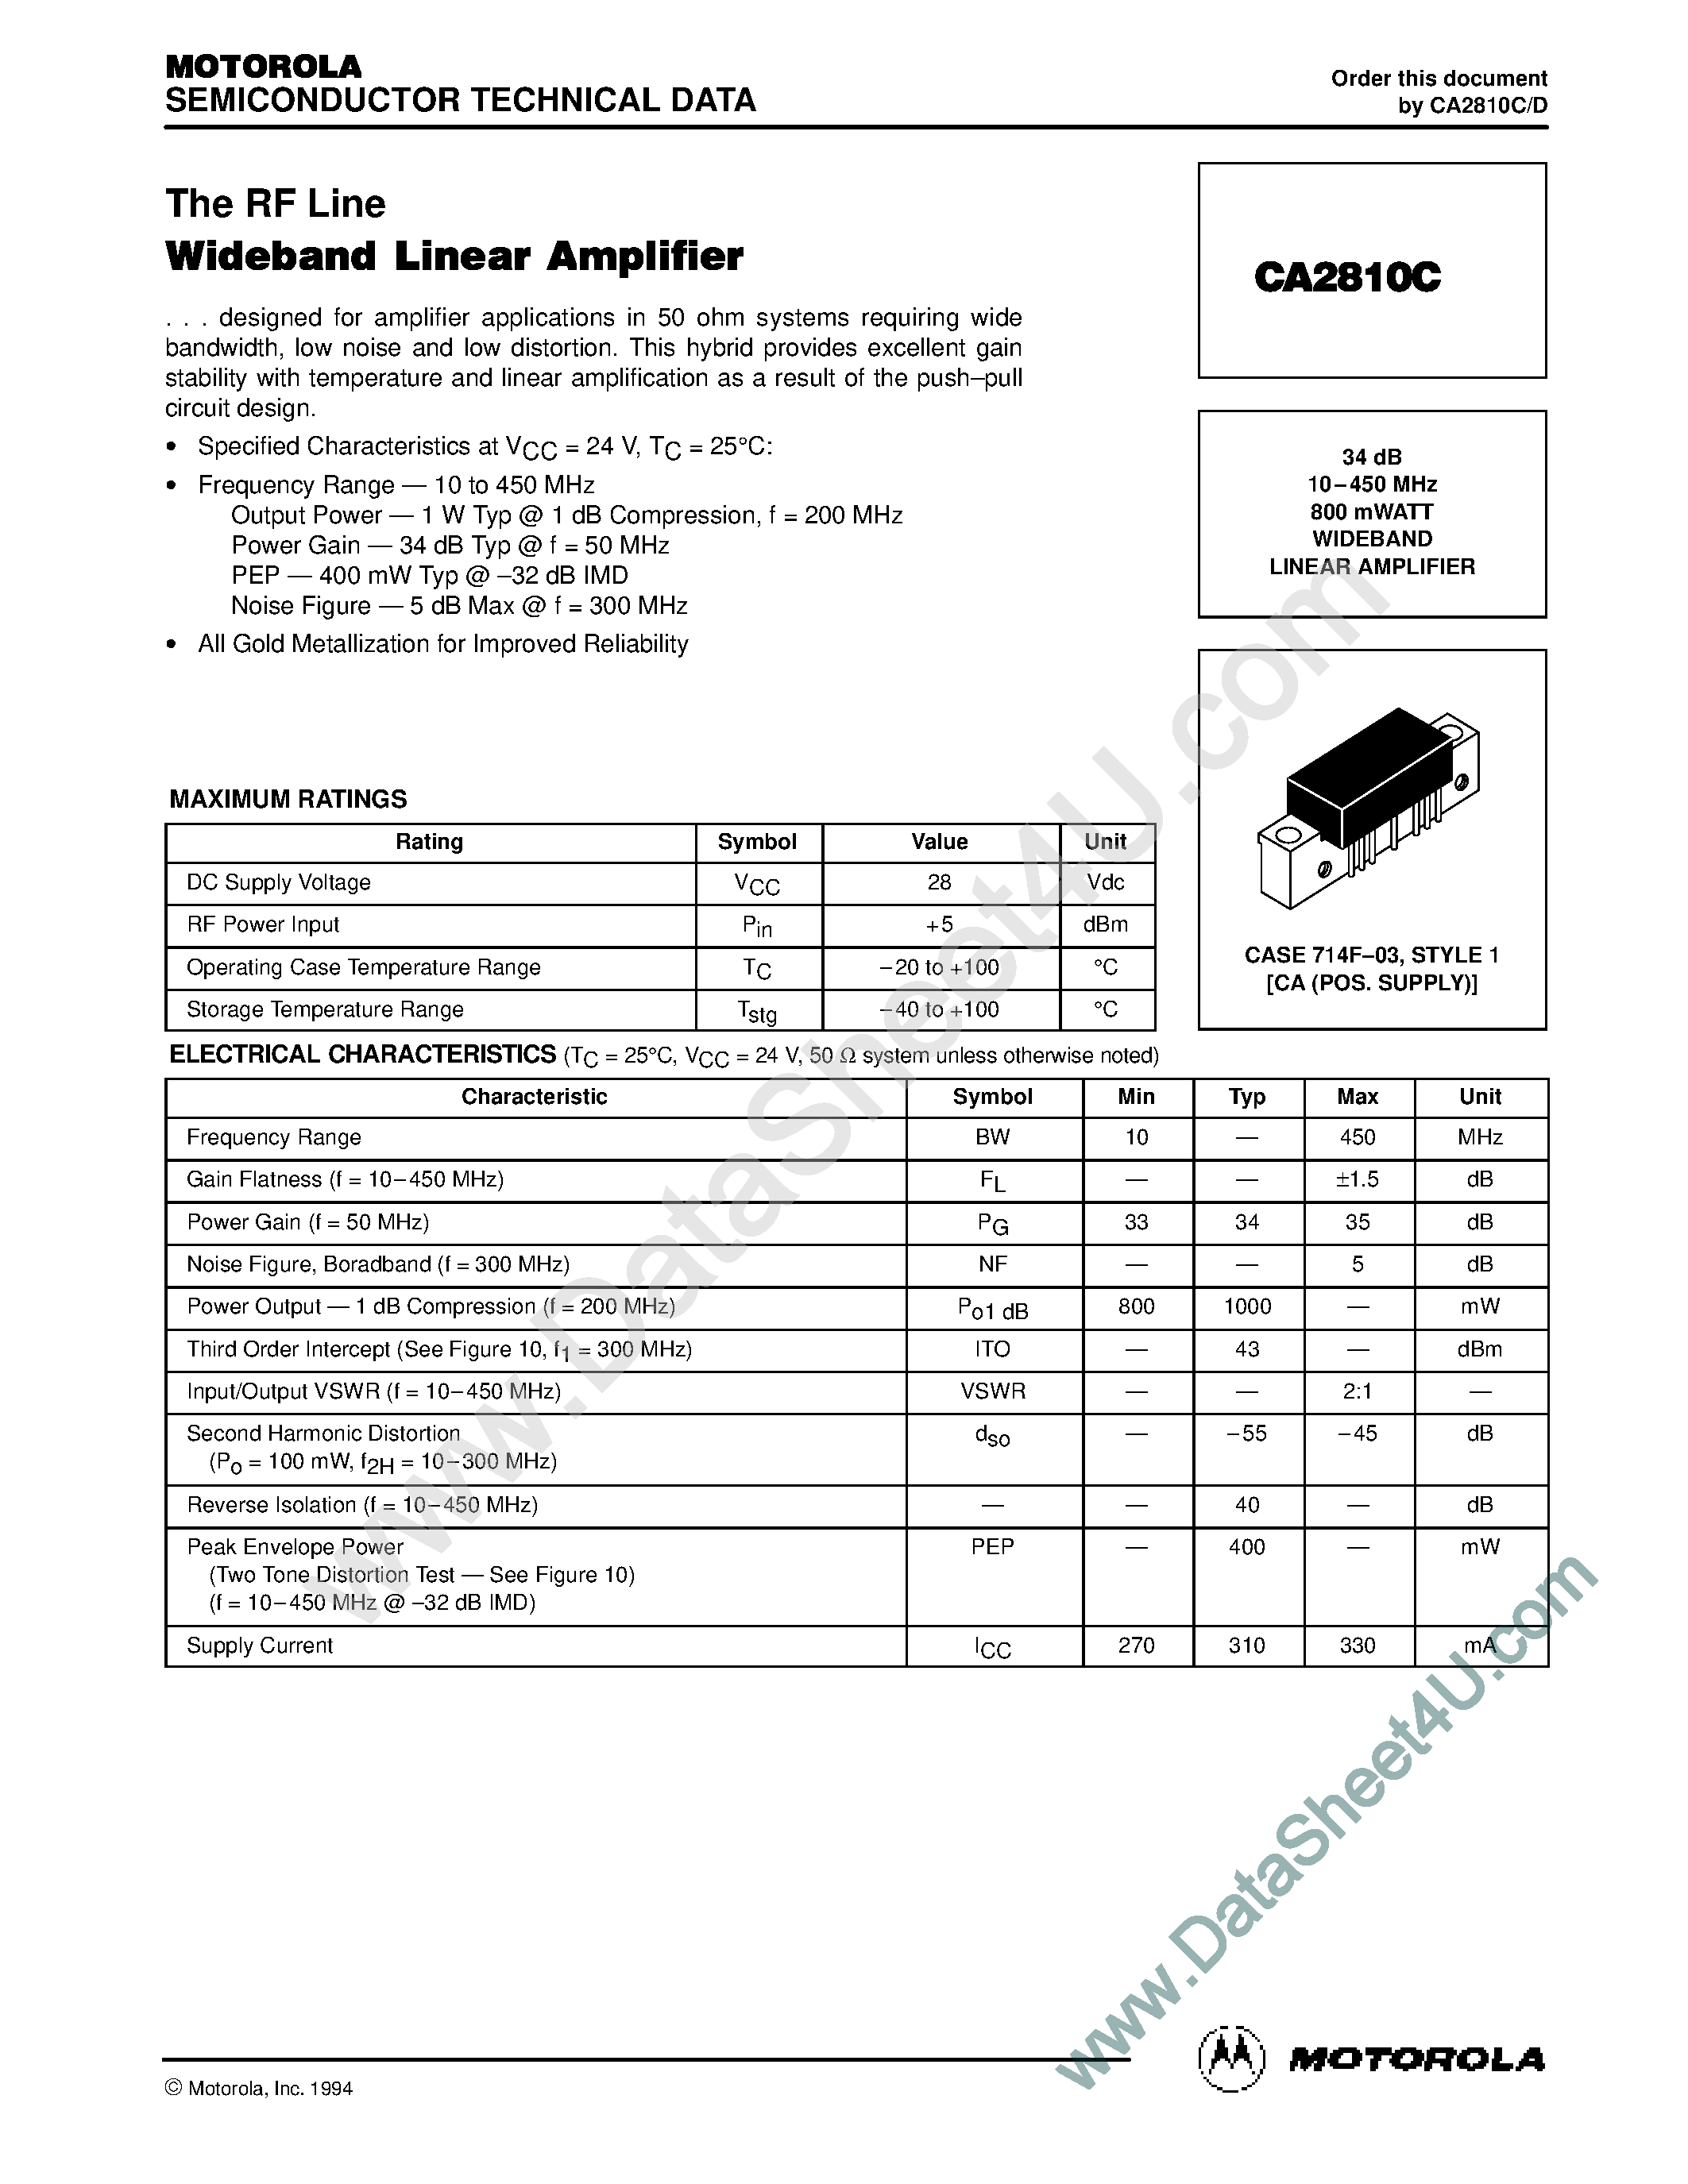 Datasheet CA2810C - 34 dB 10-450 MHz 800 mWATT WIDEBAND LINEAR AMPLIFIER page 1